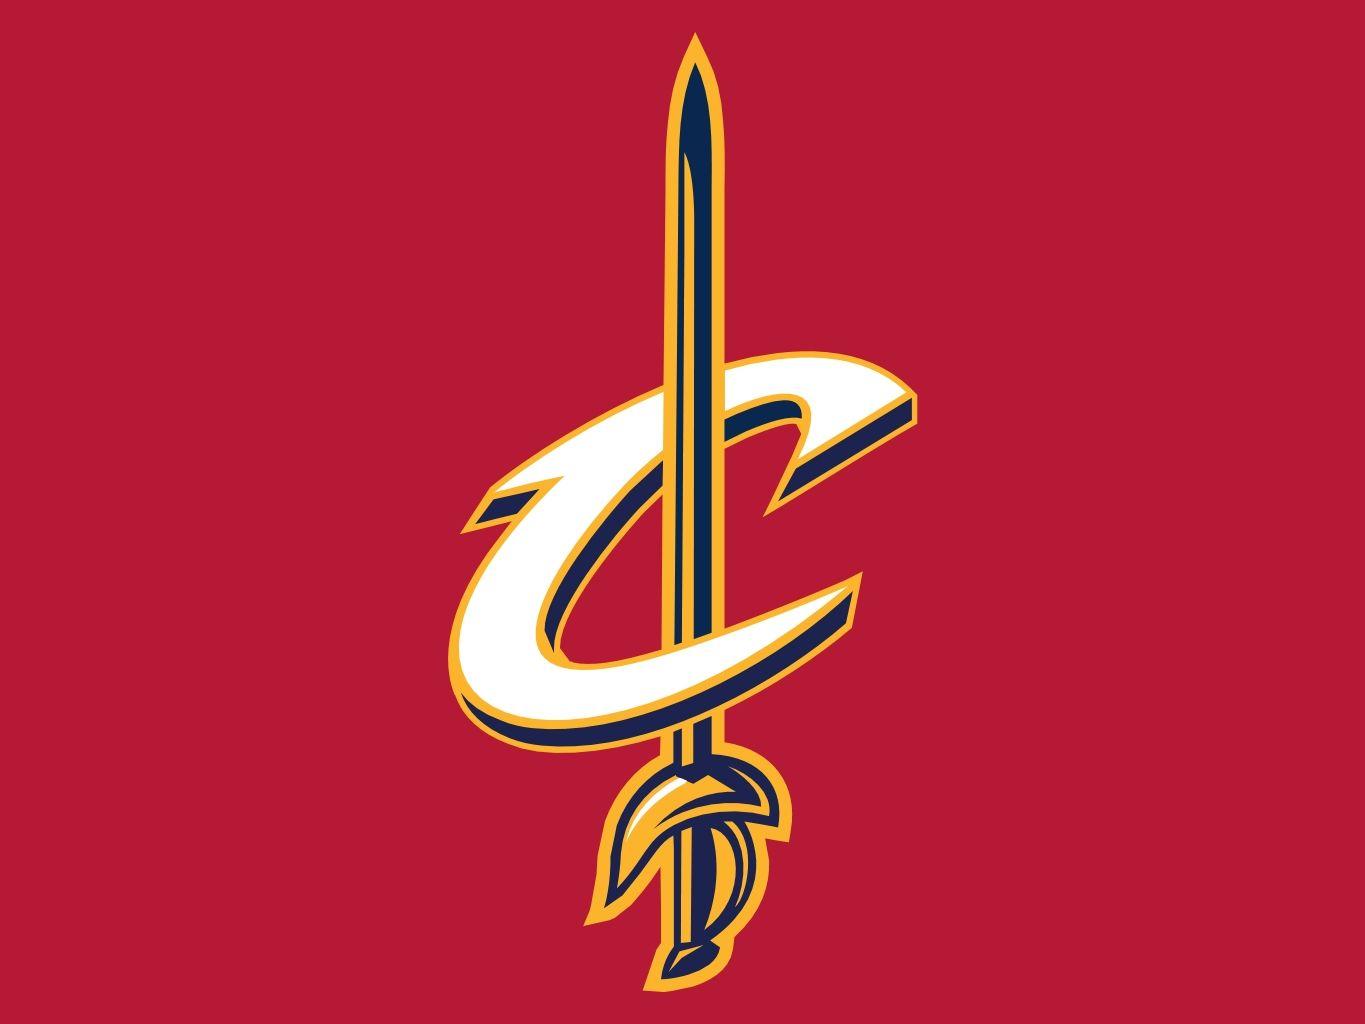 Cleveland Cavaliers Wordmark Logo Wallpaper by llu258 on DeviantArt